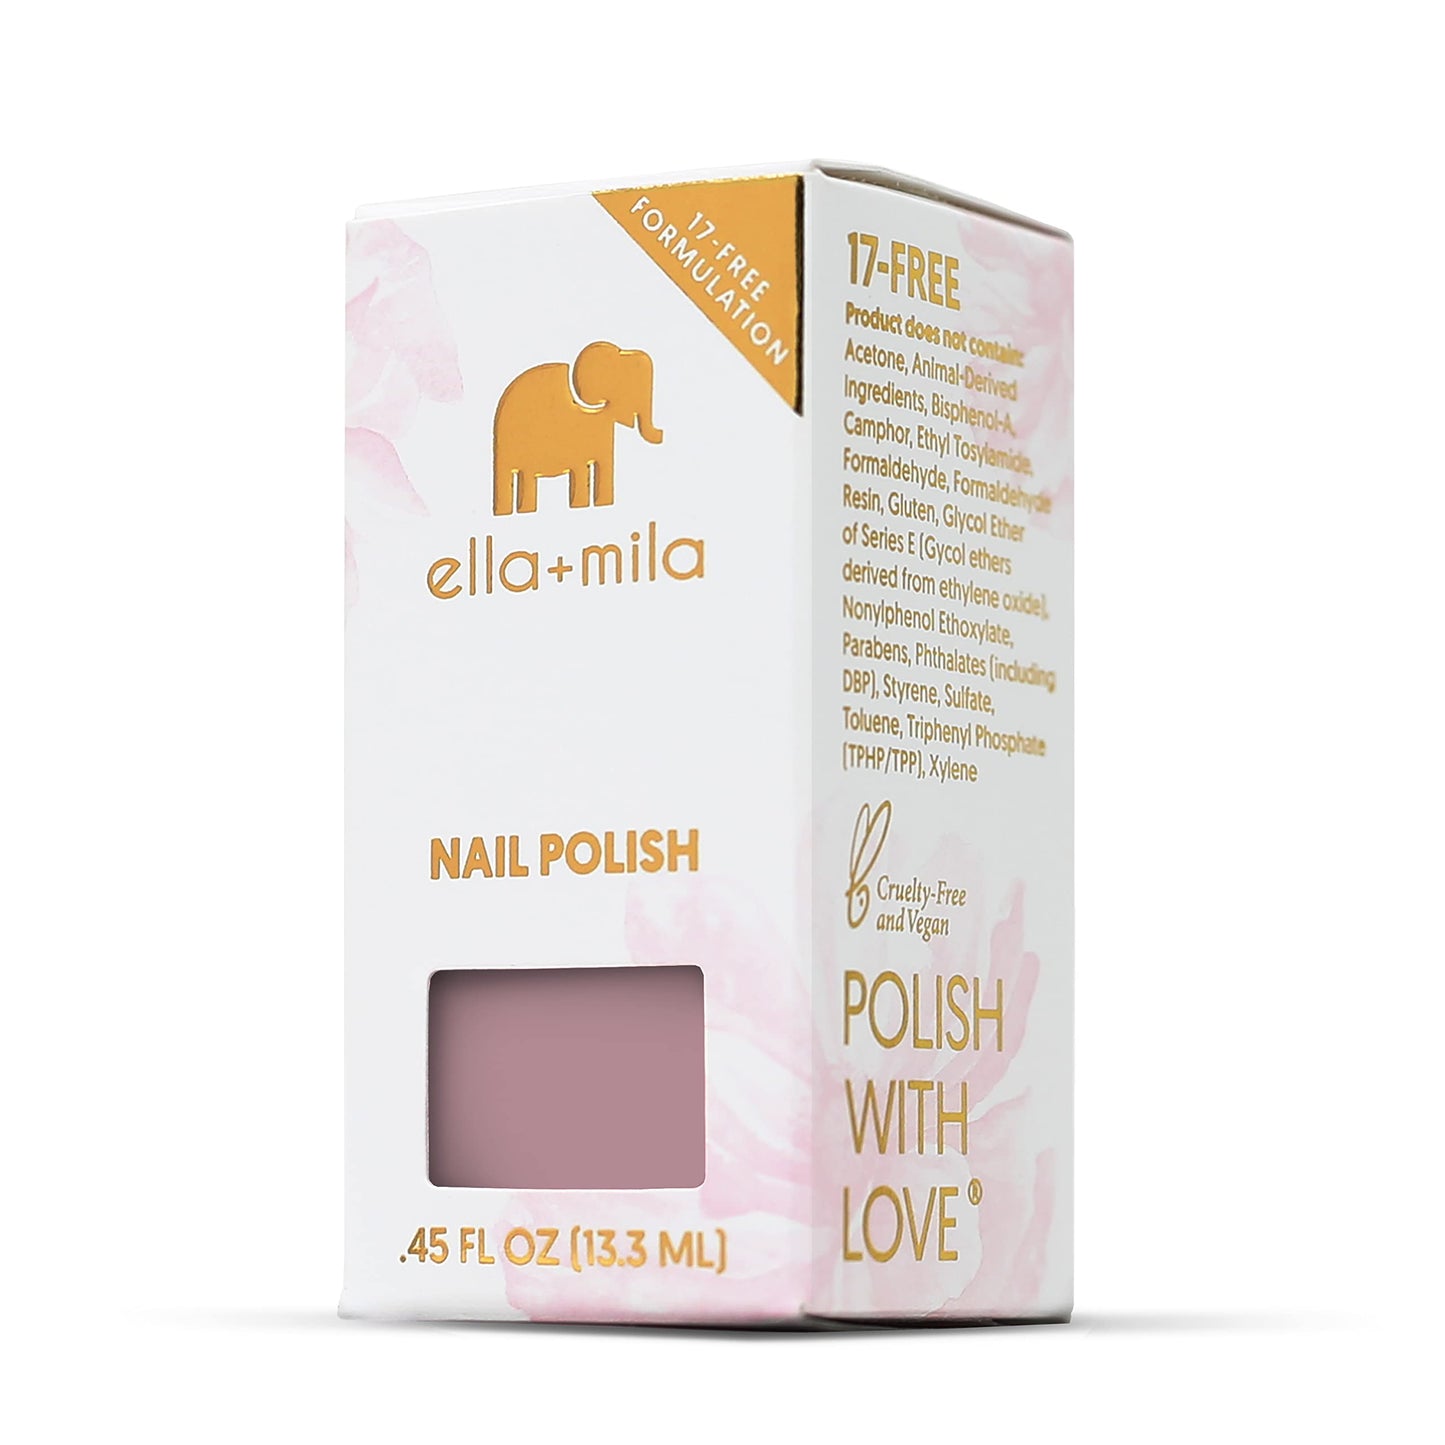 ella+mila Professional Nail Polish - Quick Dry Nail Polish - Long-Lasting & Chip Resistant Formula (Love Collection - Sugar Fairy - 0.45 fl oz)